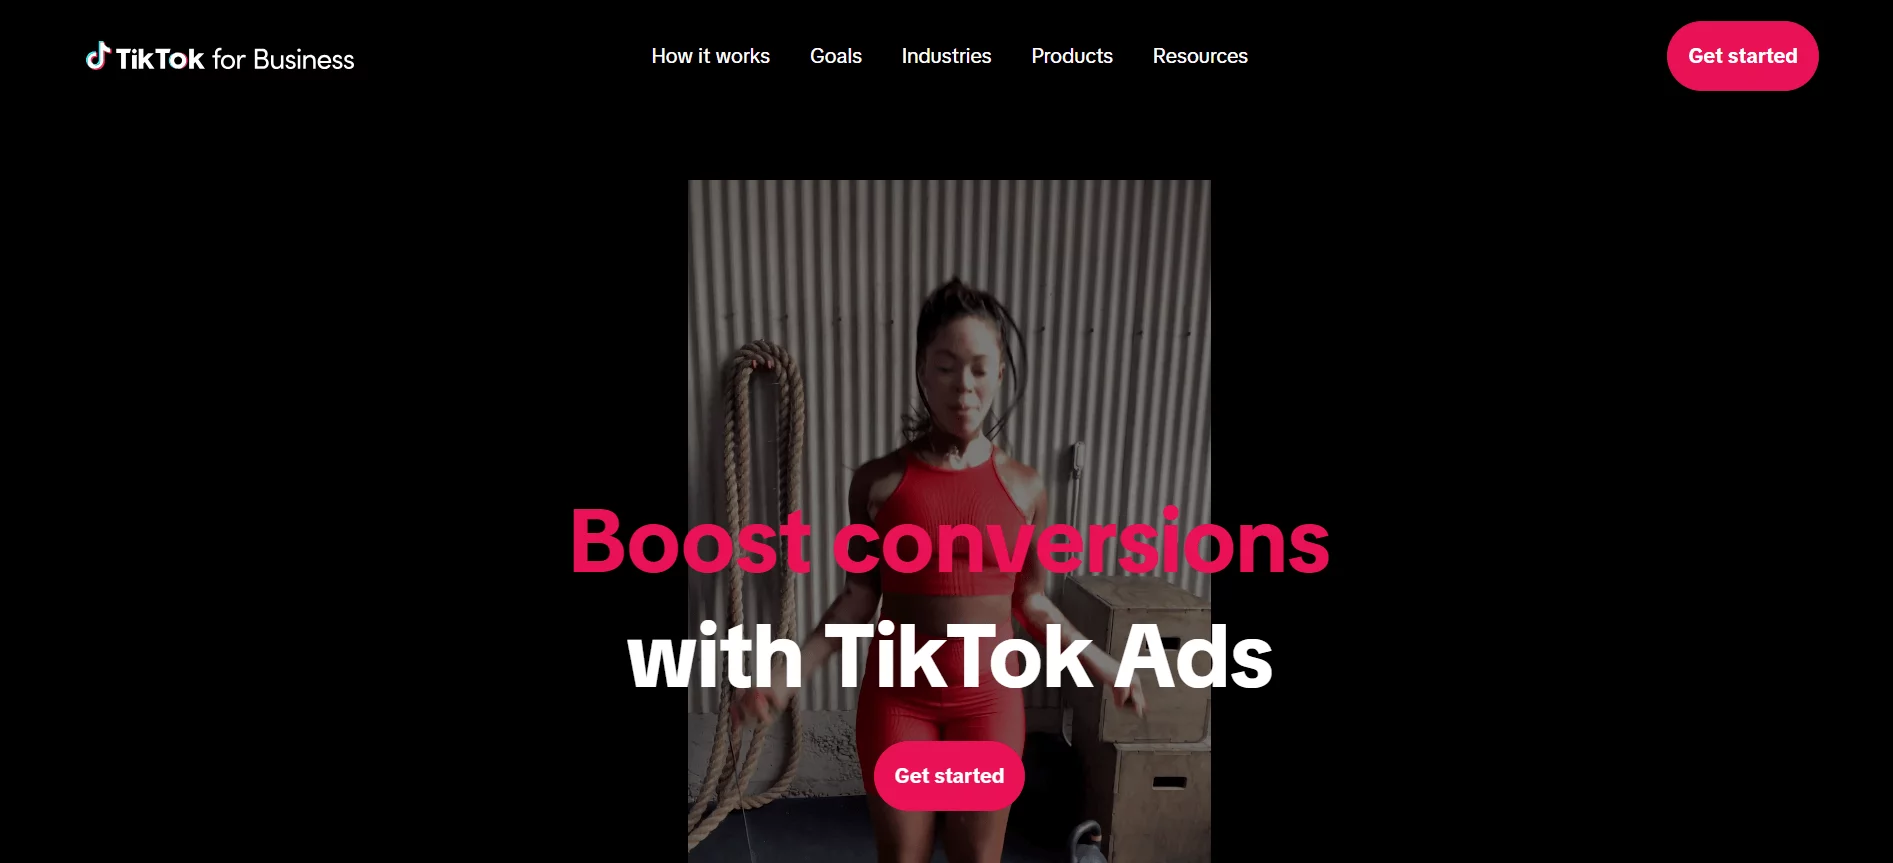 TikTok for business homepage